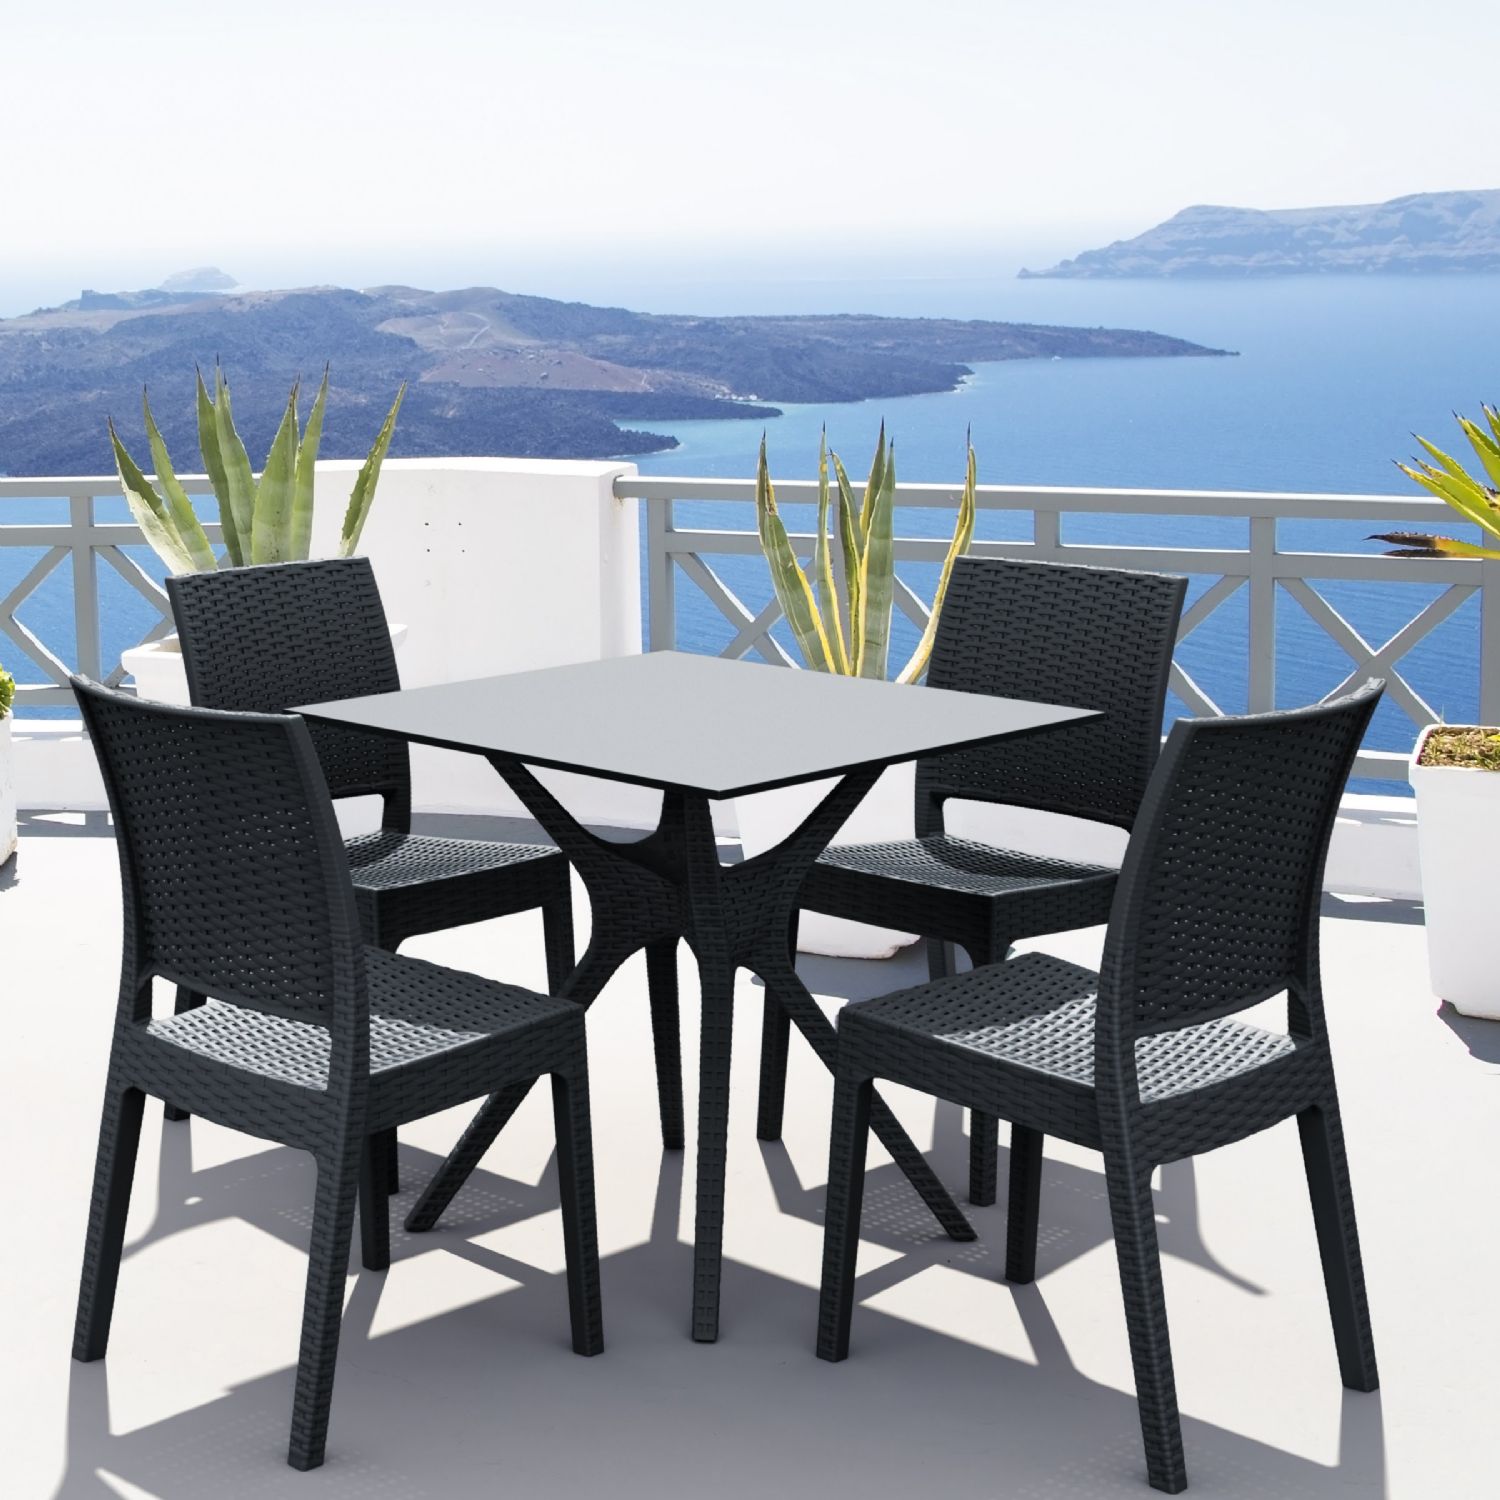 Ibiza Square Dining Table 31 inch Rattan Gray ISP863-DG - 5